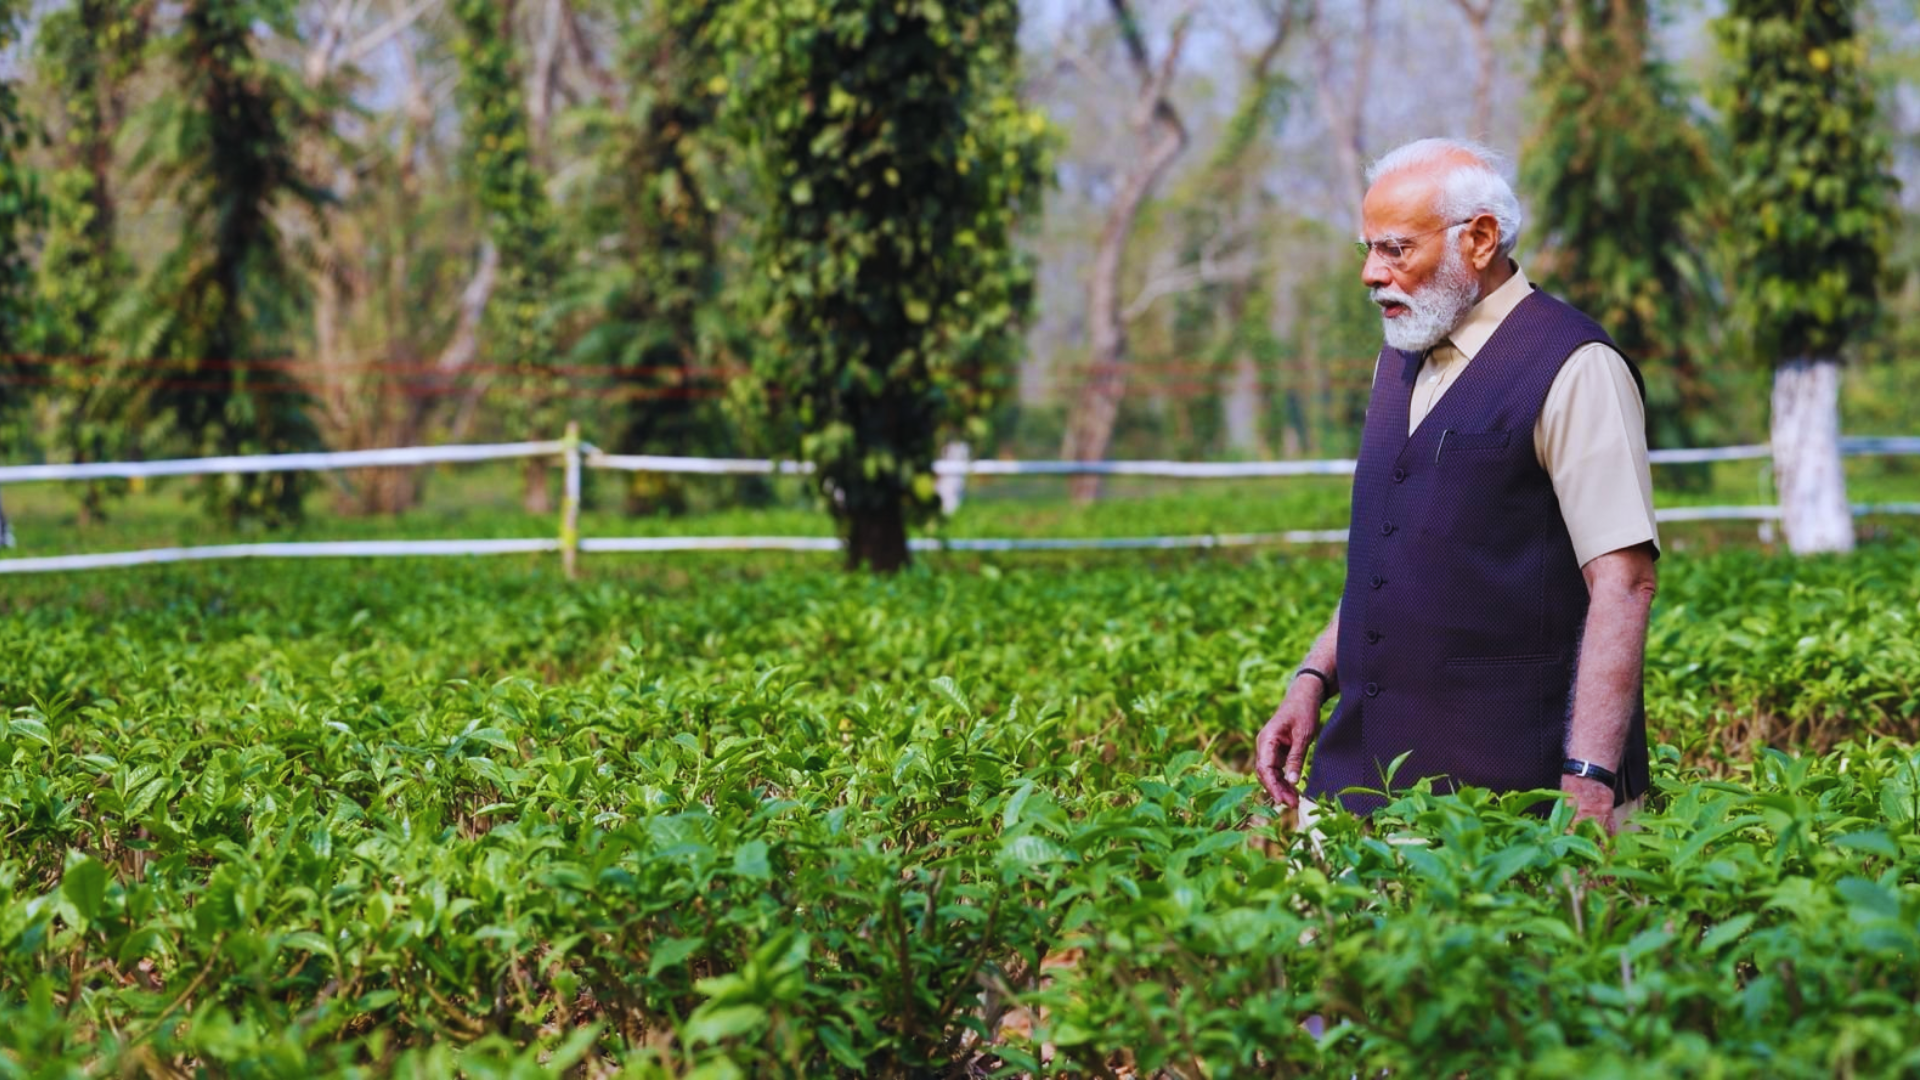 PM Modi Visits Tea Garden, Promotes Tourism in Assam